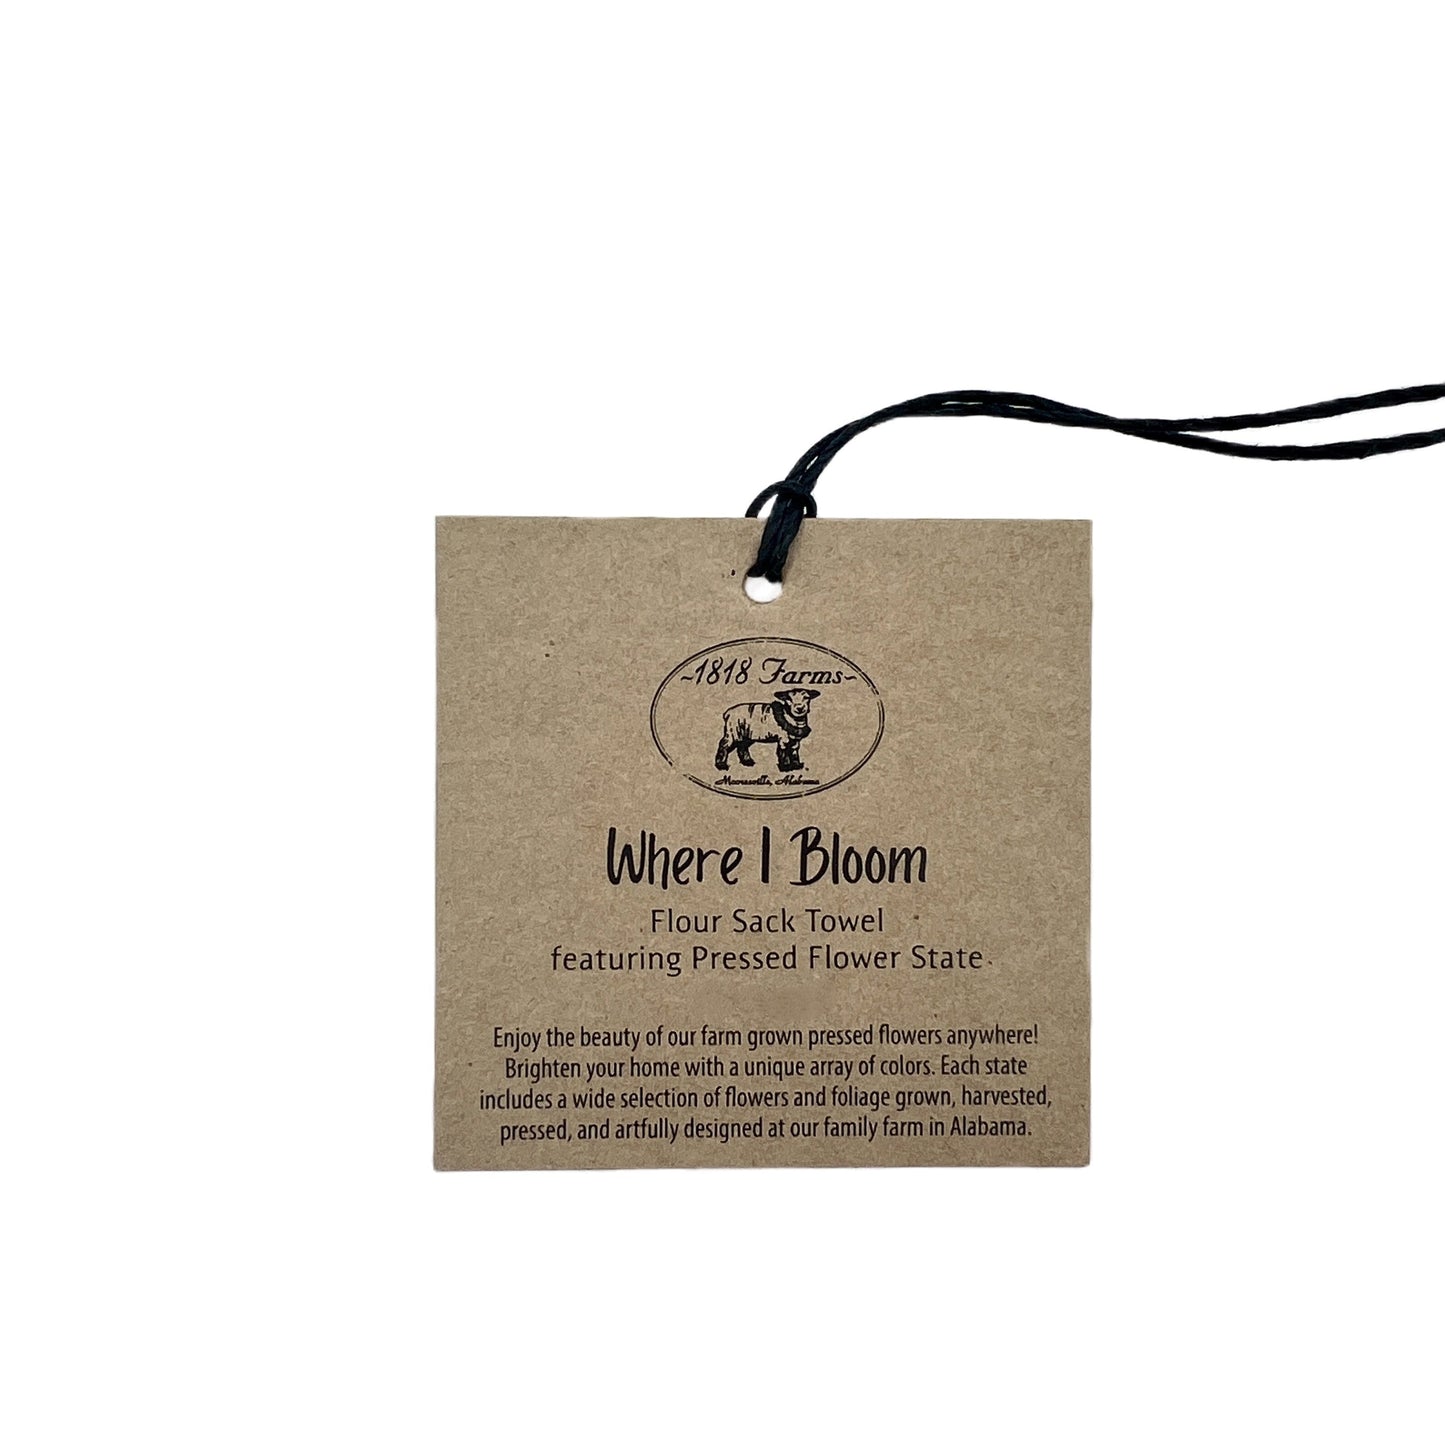 New York Themed Flour Sack Towel  - "Where I Bloom" Collection Towel 1818 Farms   